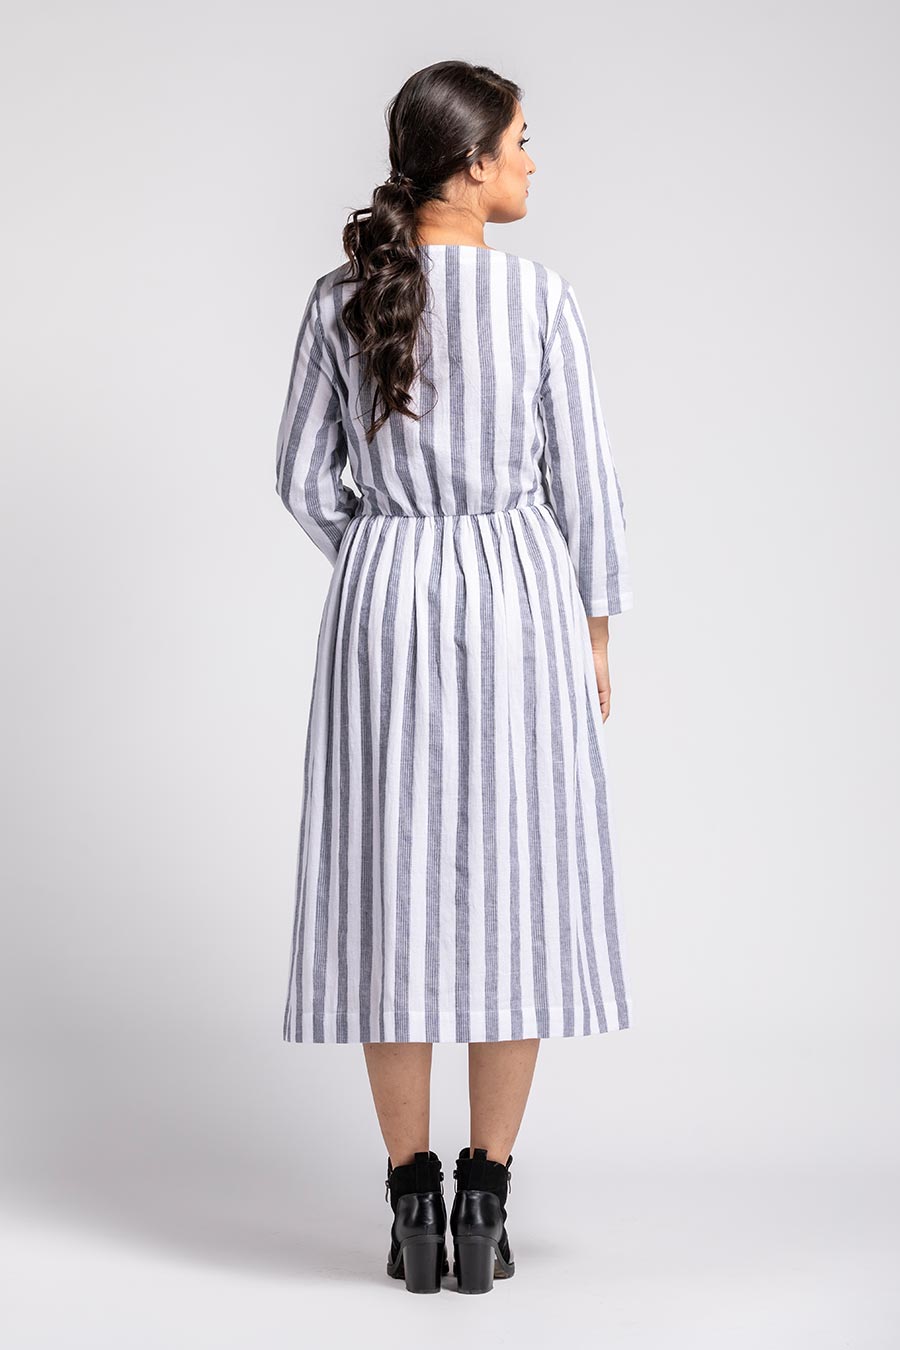 Remise Gathered Ivory Striped Dress